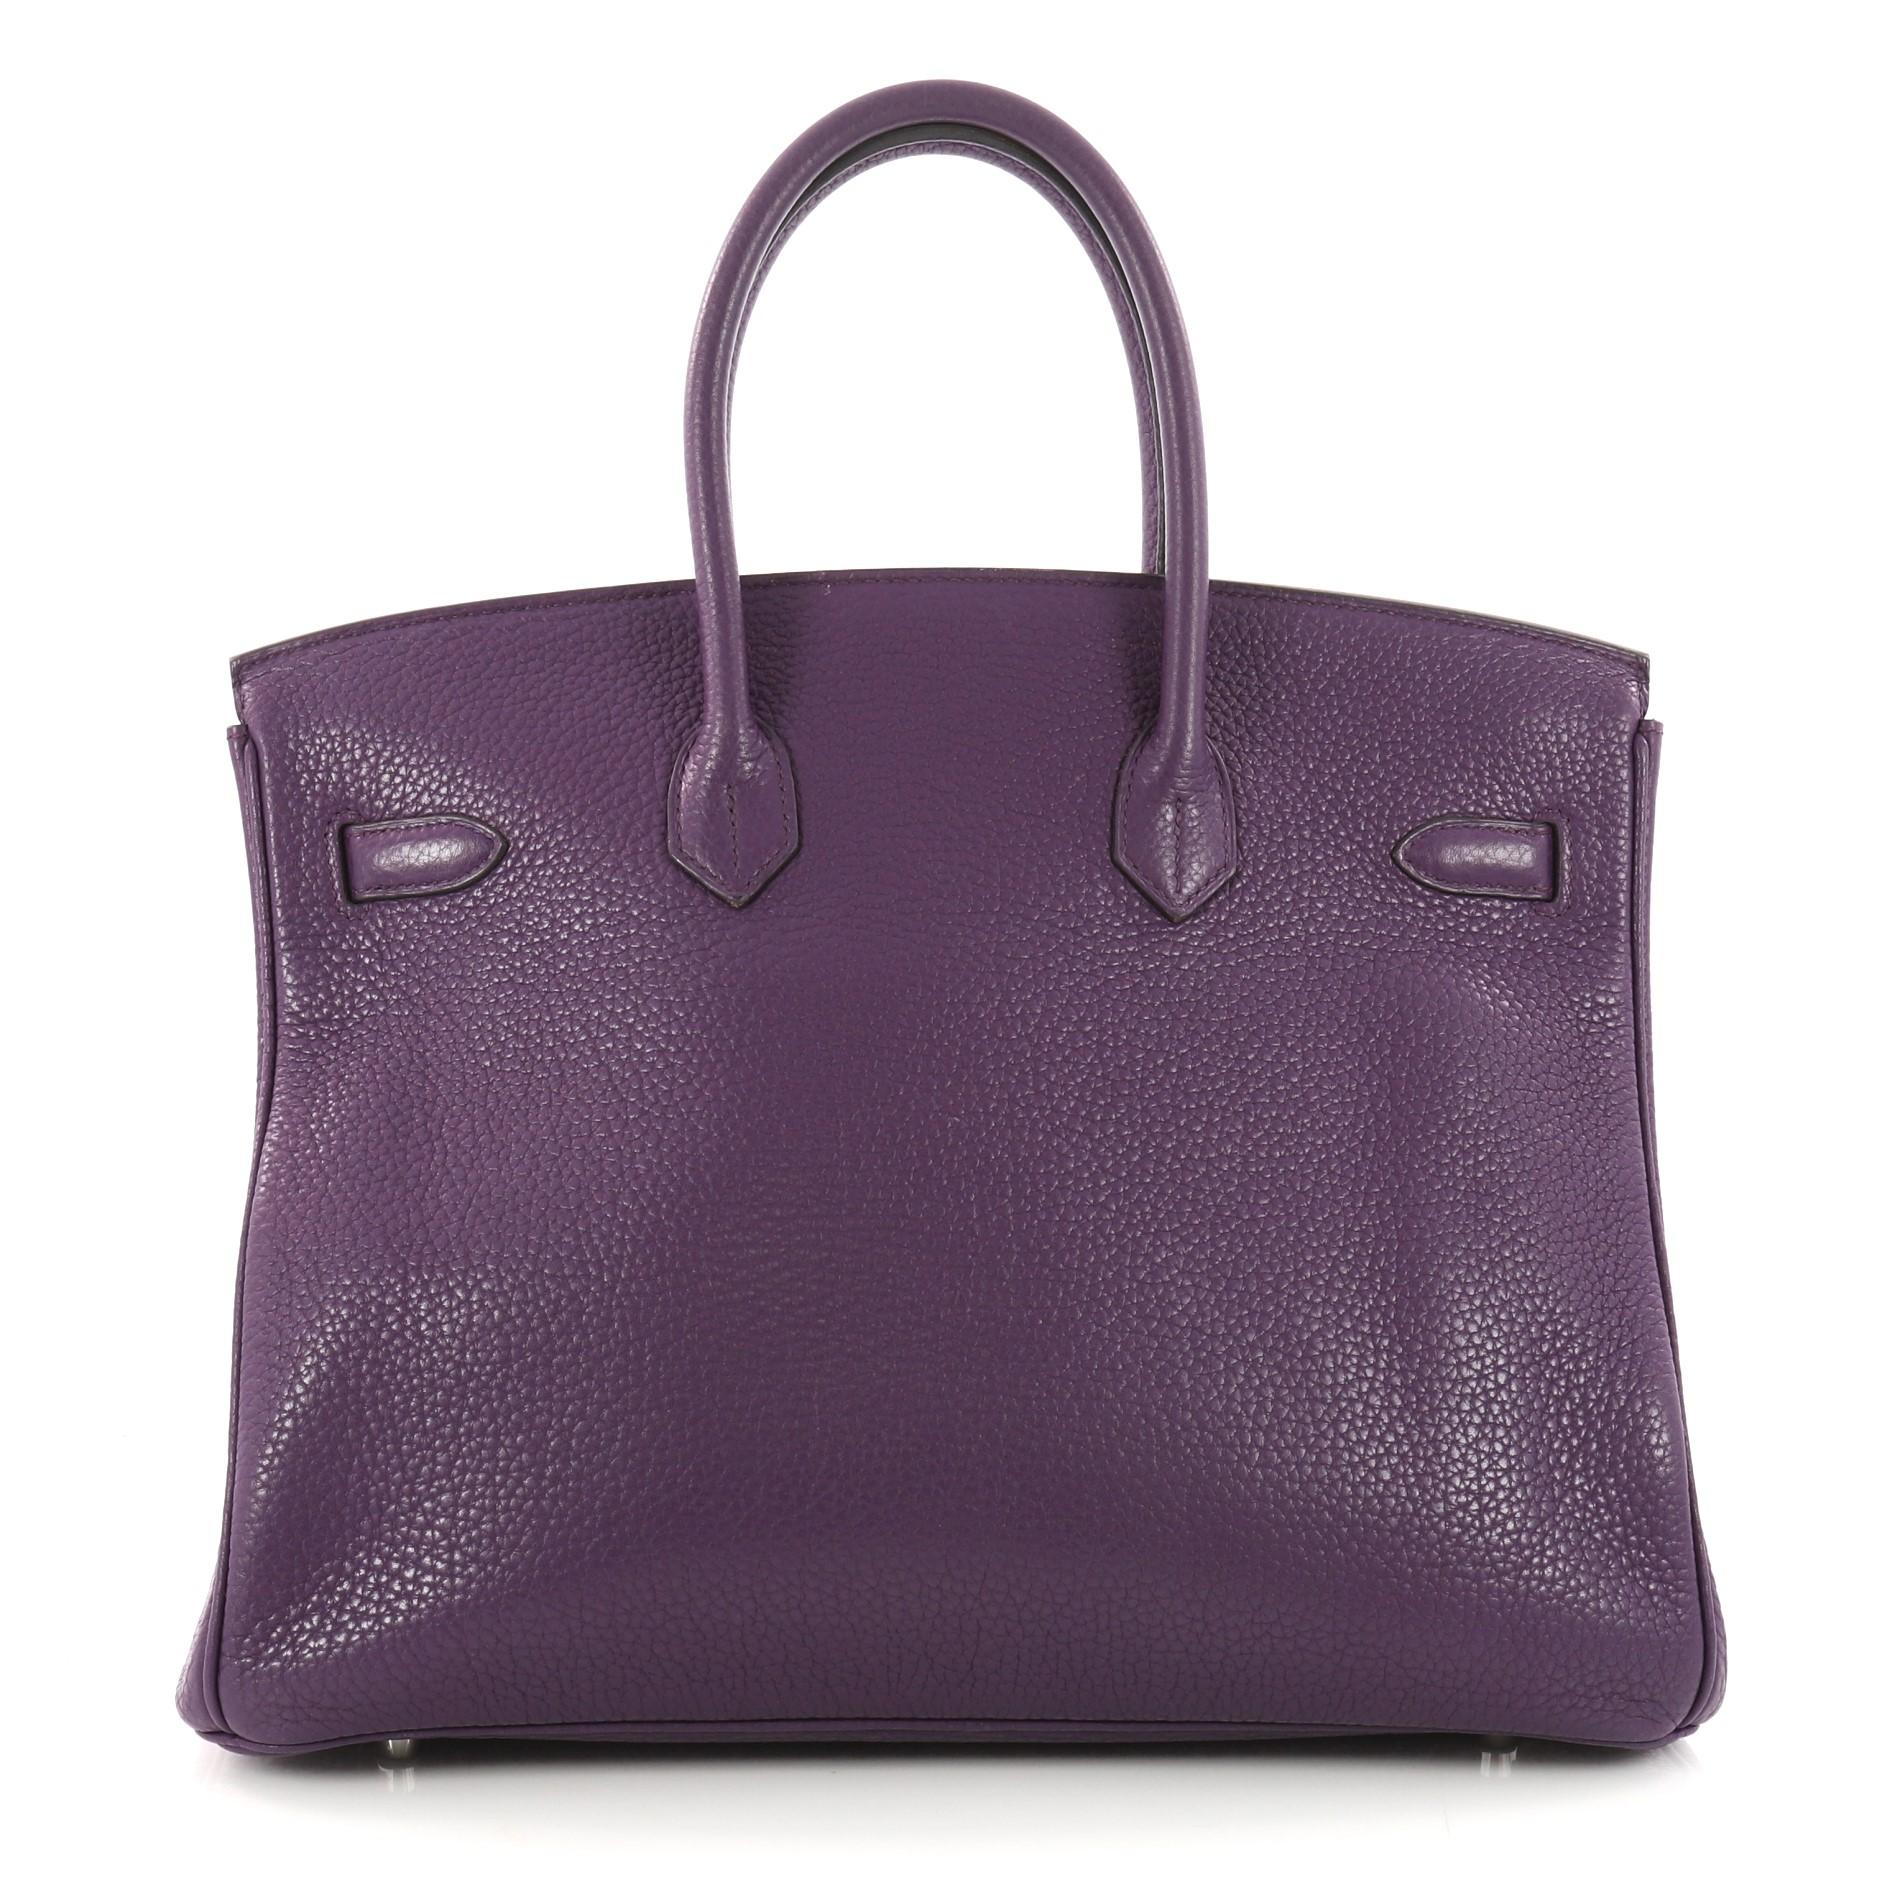 Black Hermes Birkin Handbag Ultraviolet Purple Clemence with Palladium Hardware 35 